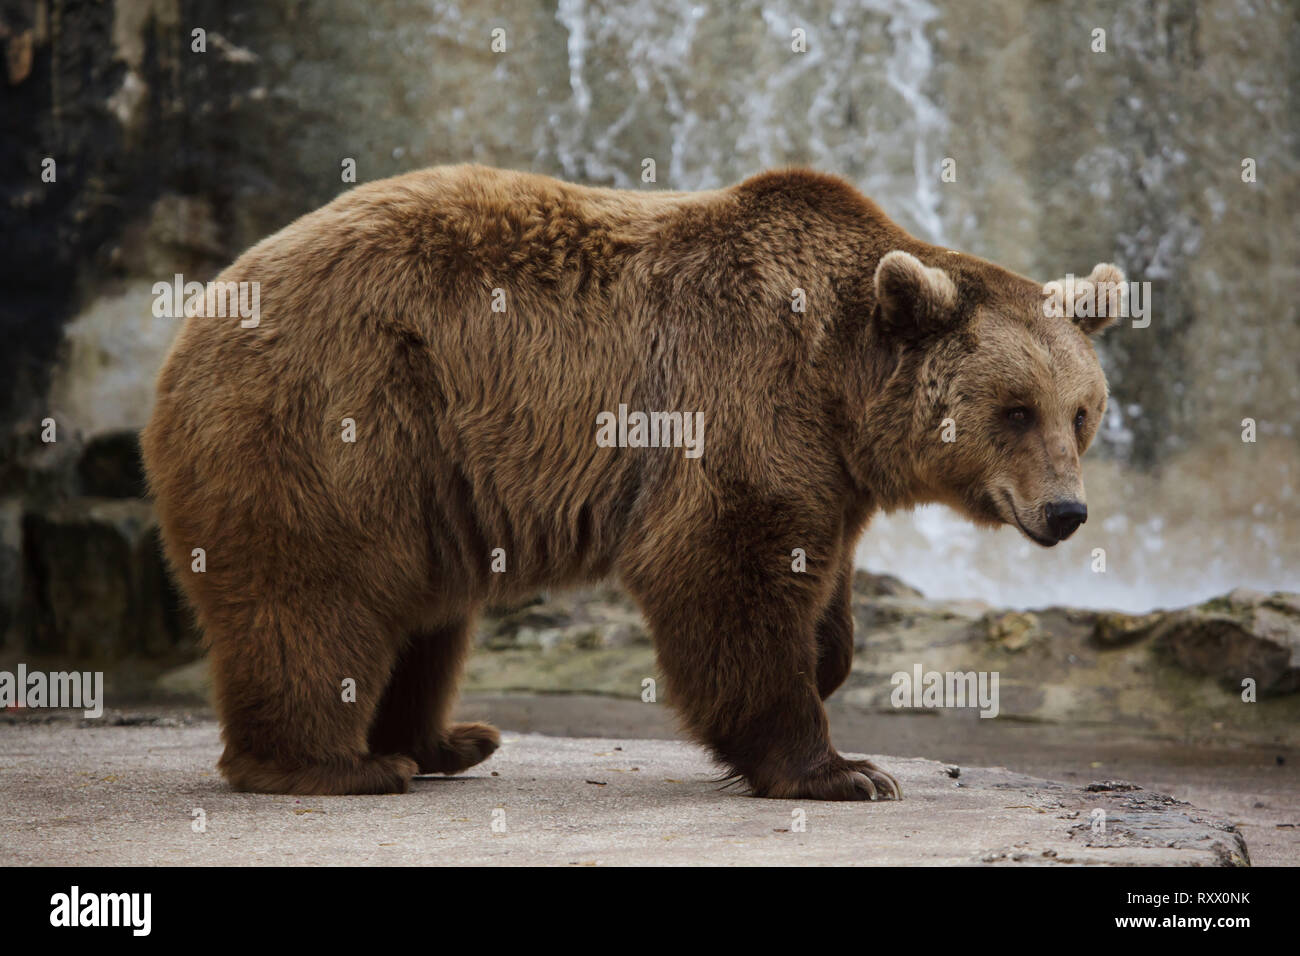 Brown bear (Ursus arctos) at Lisbon Zoo (Jardim Zoológico de Lisboa) in Lisbon, Portugal. Stock Photo